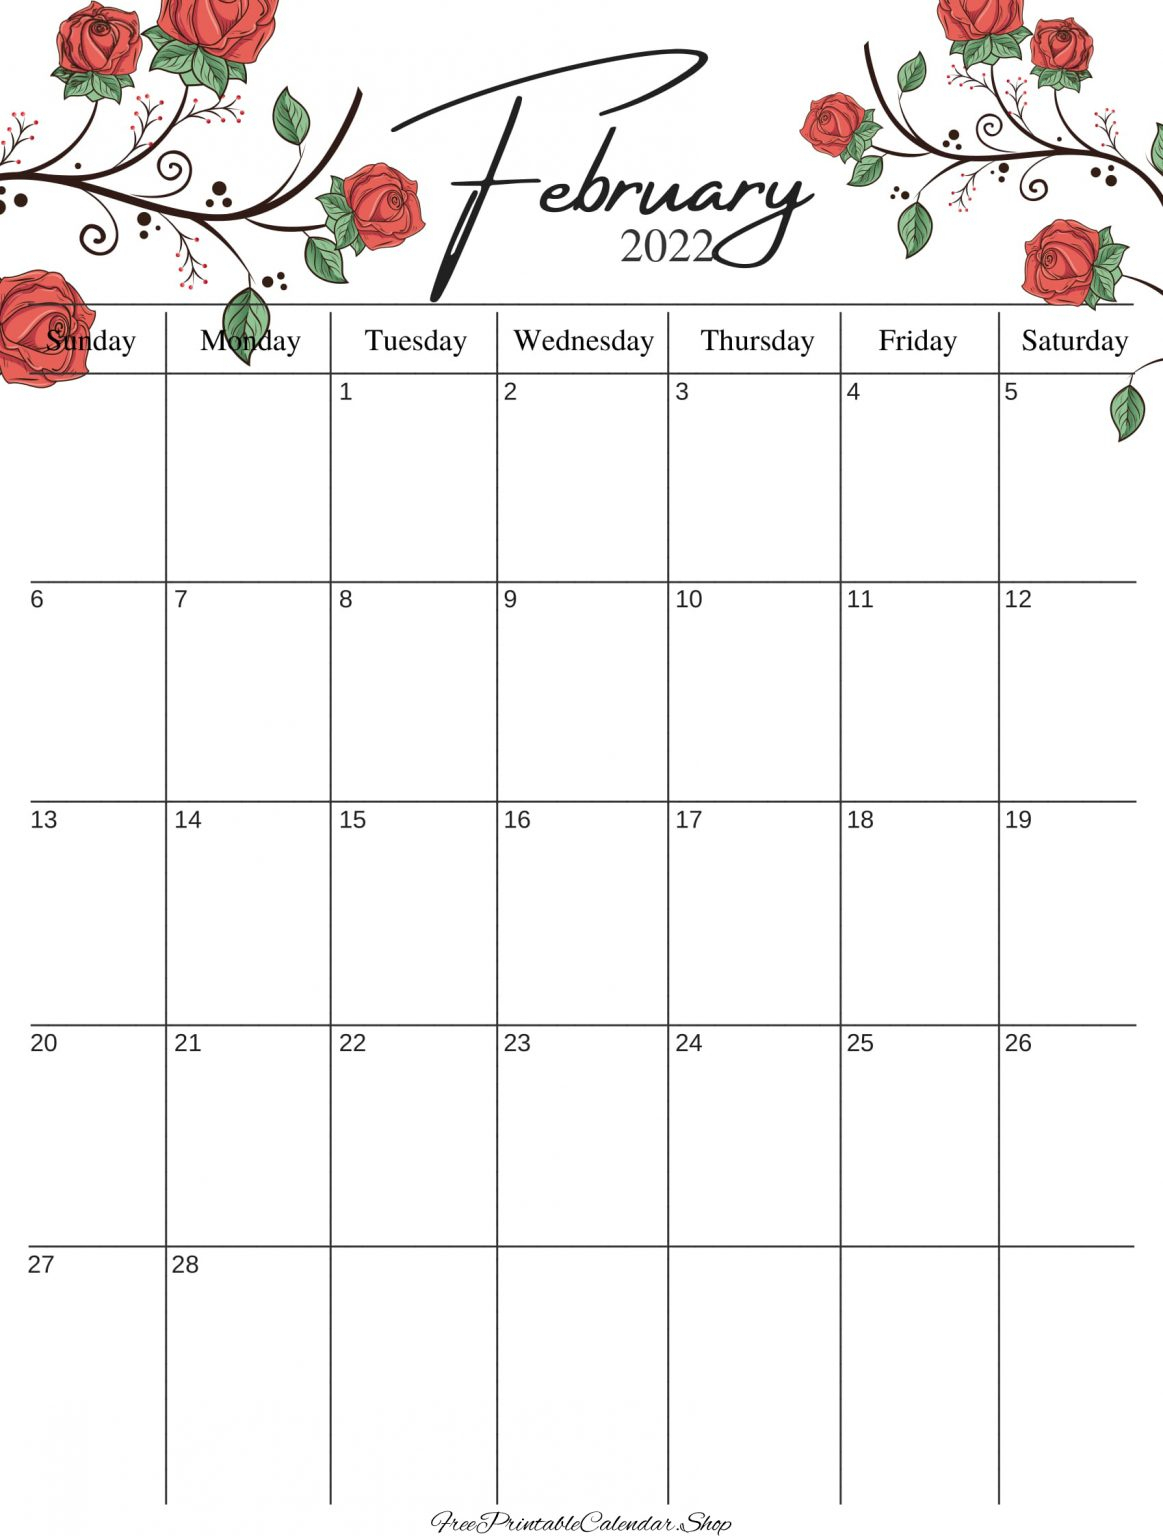 Cute February 2022 Calendar Pdf Jpg Free Shop 2021 Printable Calendars